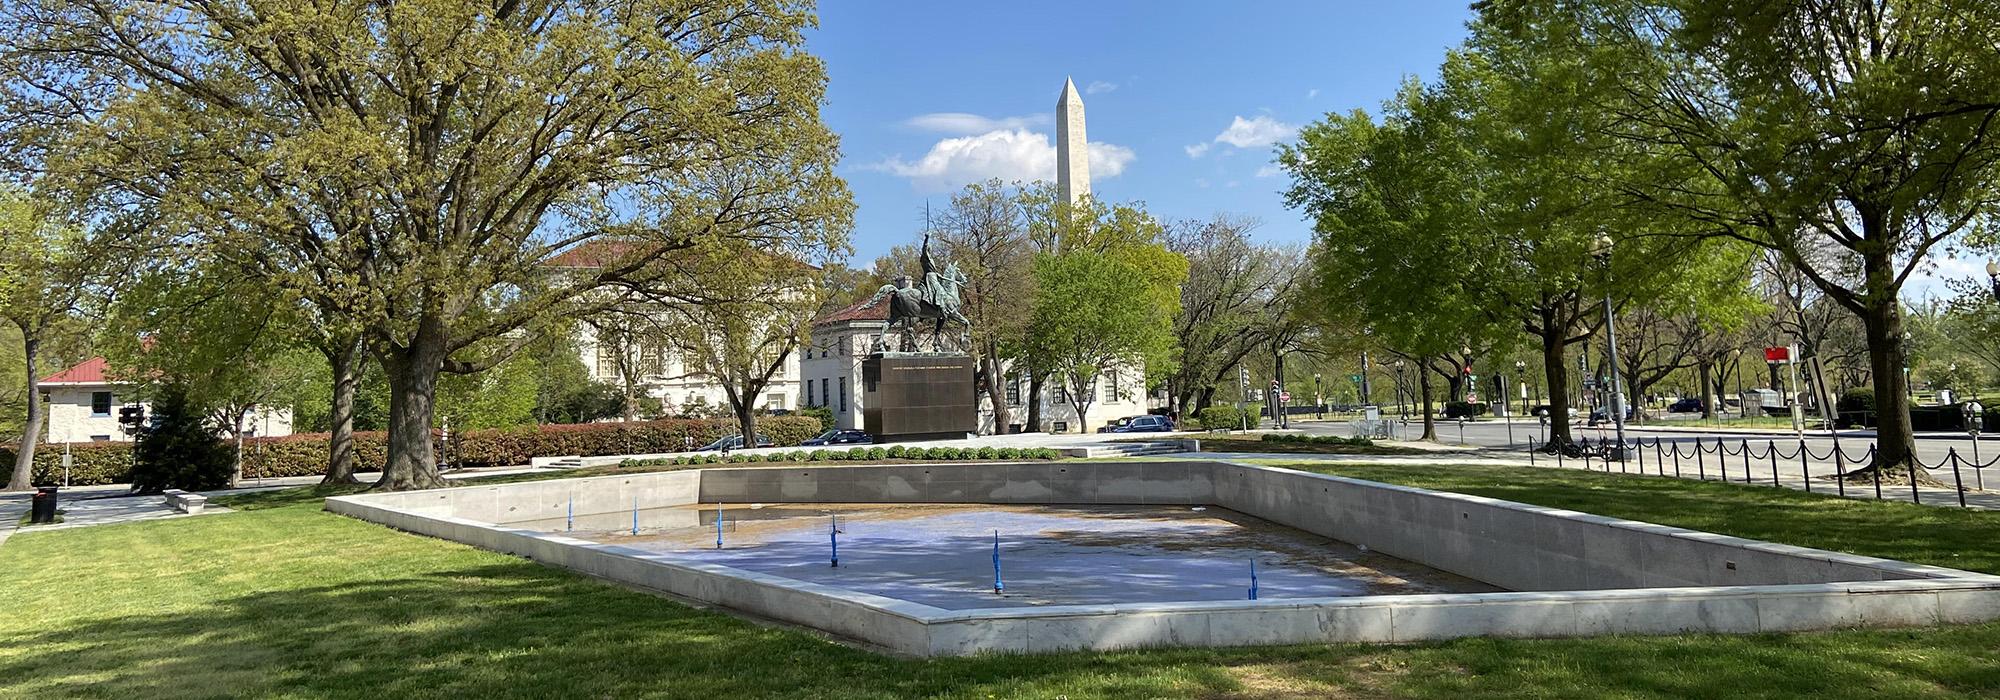 Simon Bolivar Park, Washington, DC